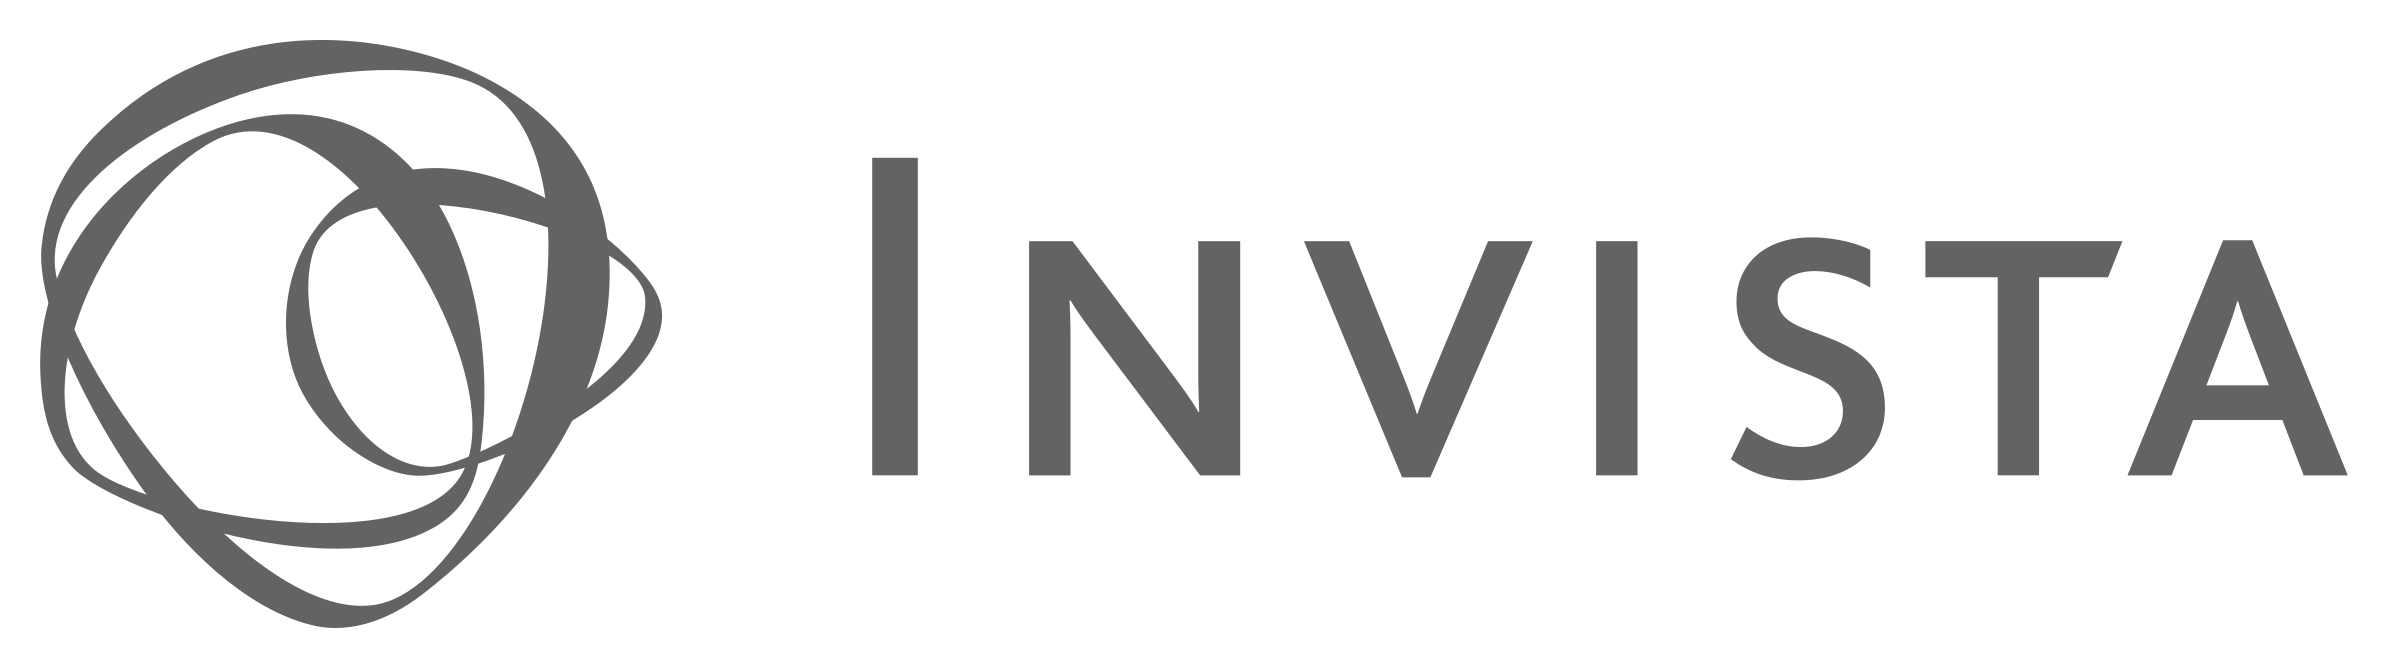 21Invista-Logo.png